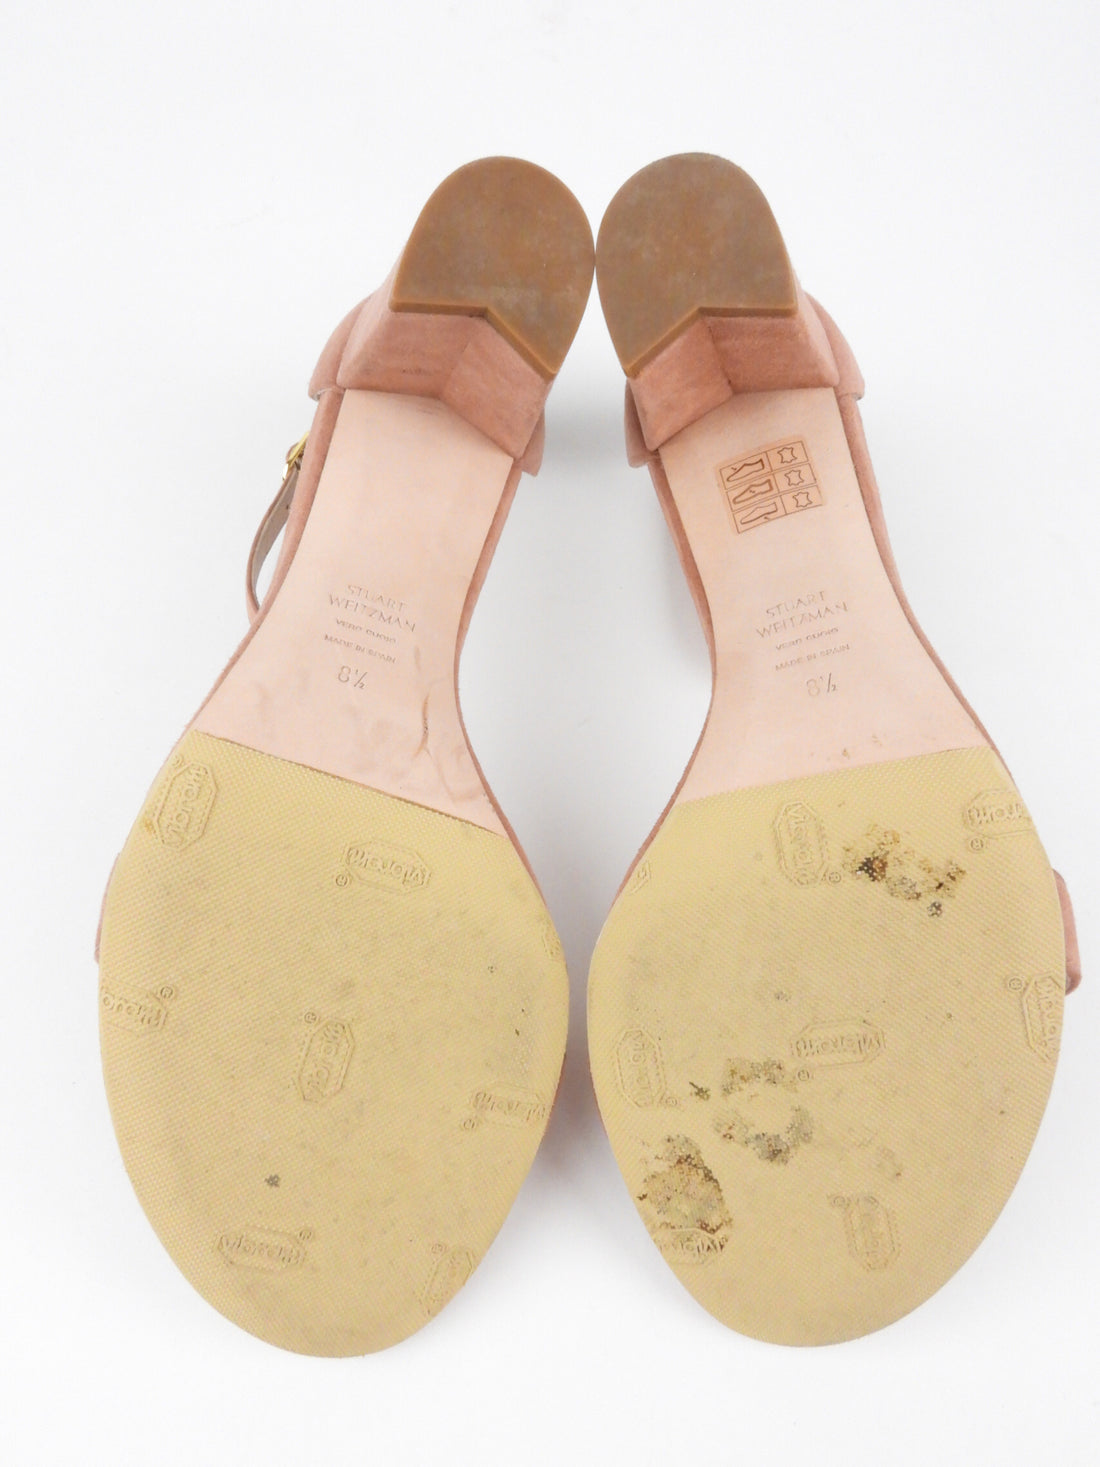 Stuart Weitzman Desert Rose Suede Leather Nearly Nude Block Heel Sandal - 8.5